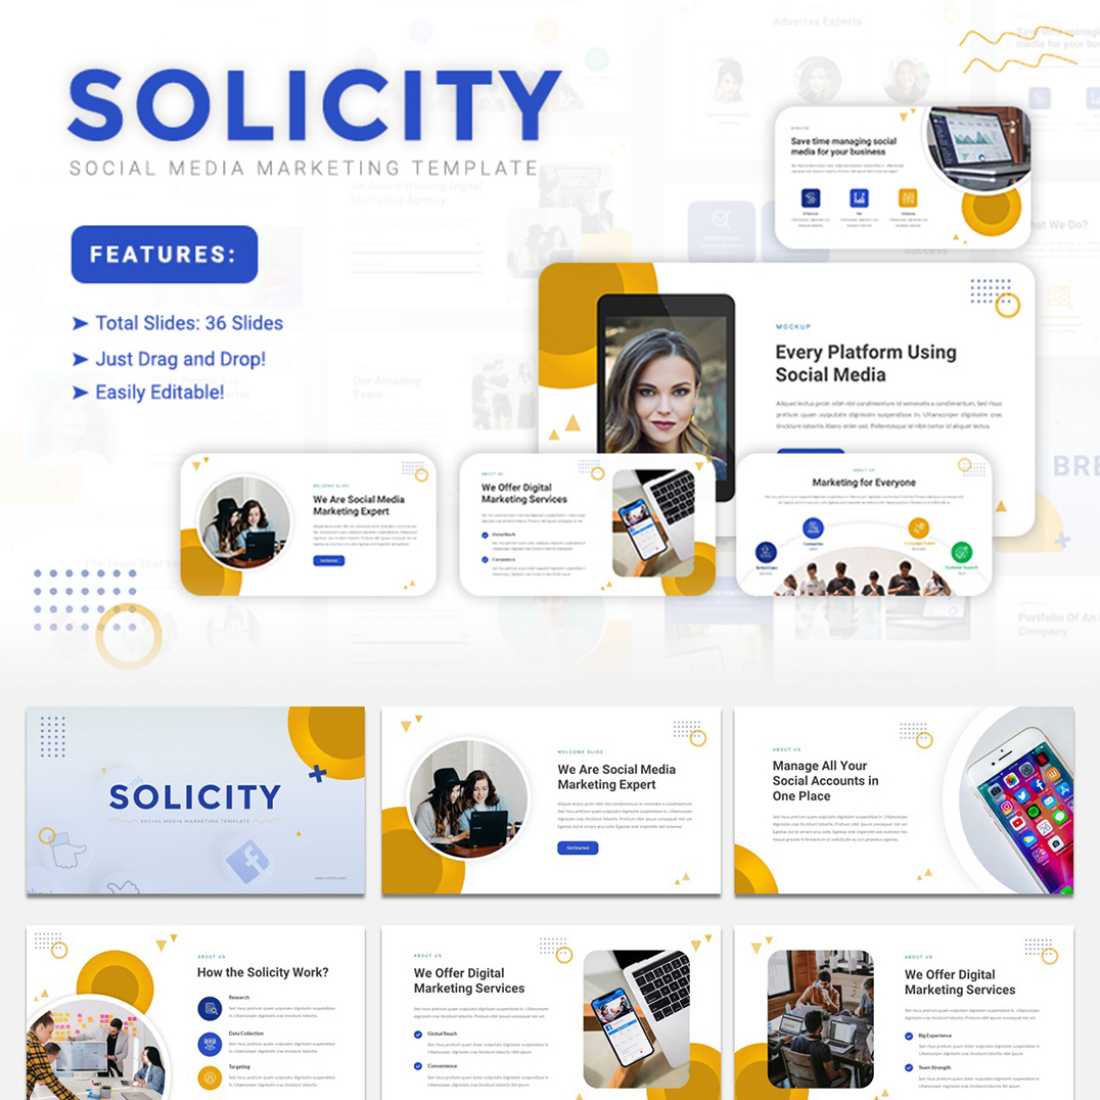 Solicity - Social Media Marketing Keynote Presentation Template cover image.